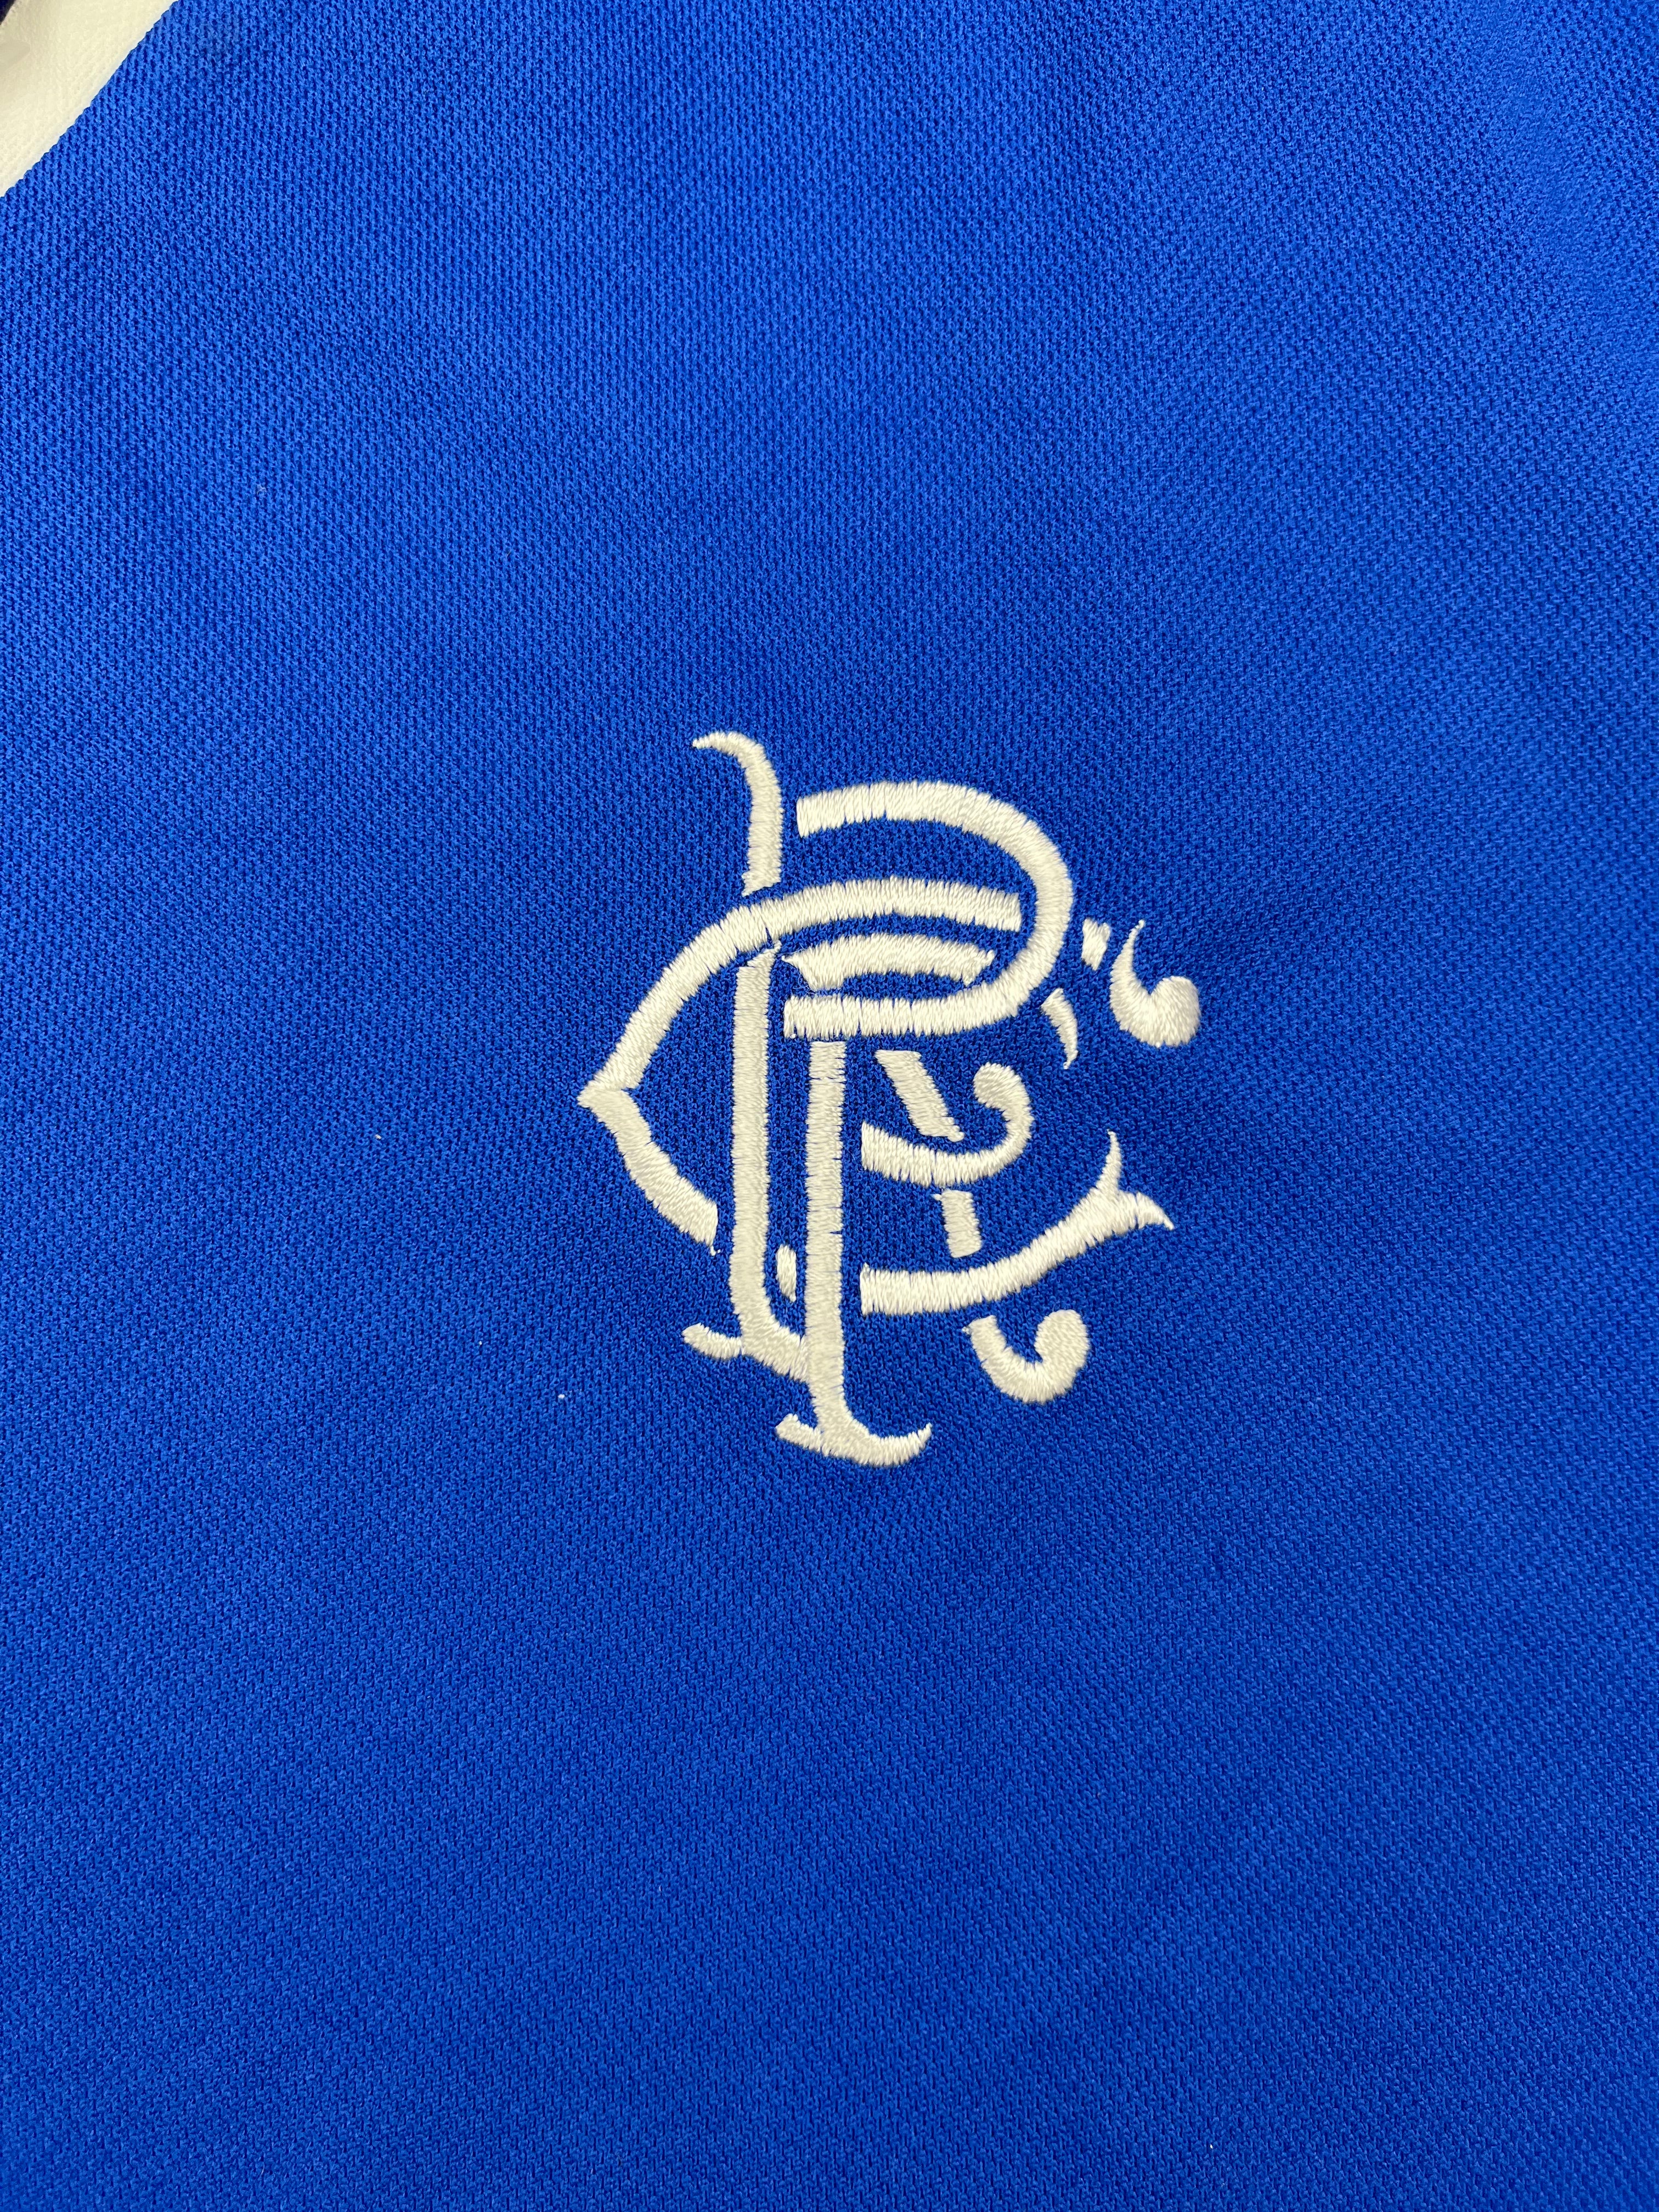 1999/01 Rangers Home Shirt (L) BNIB